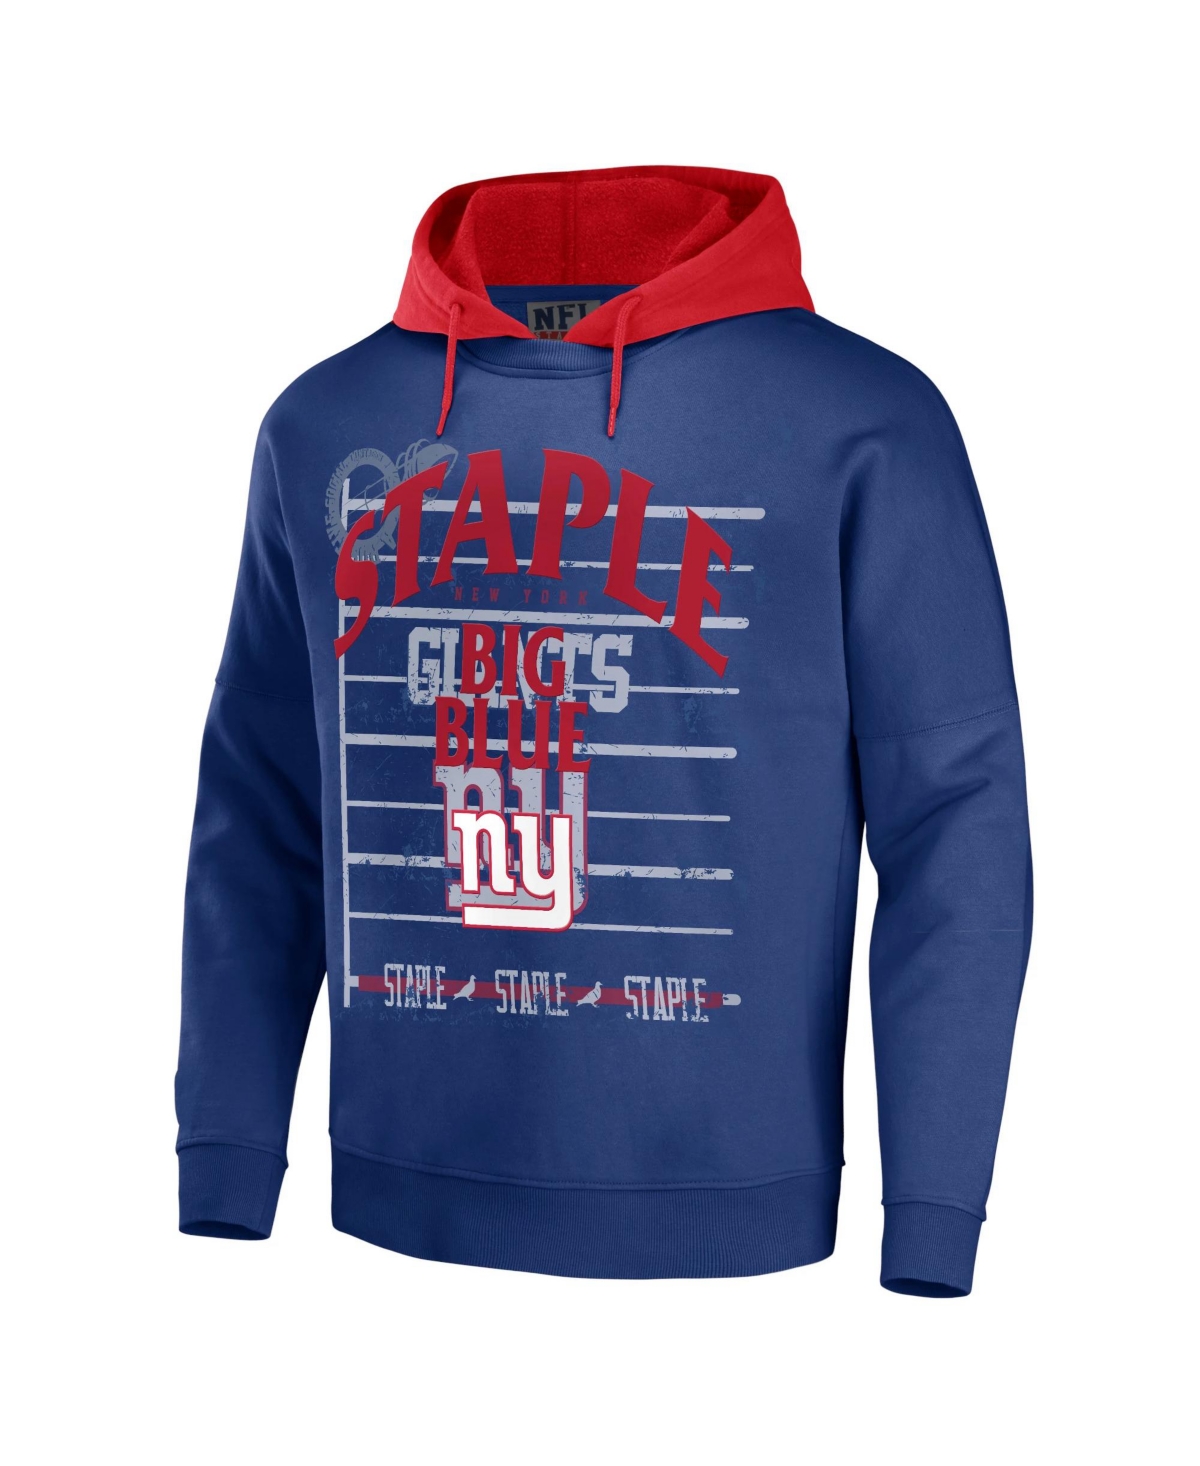 Shop Nfl Properties Men's Nfl X Staple Blue New York Giants Oversized Gridiron Vintage-like Wash Pullover Hoodie